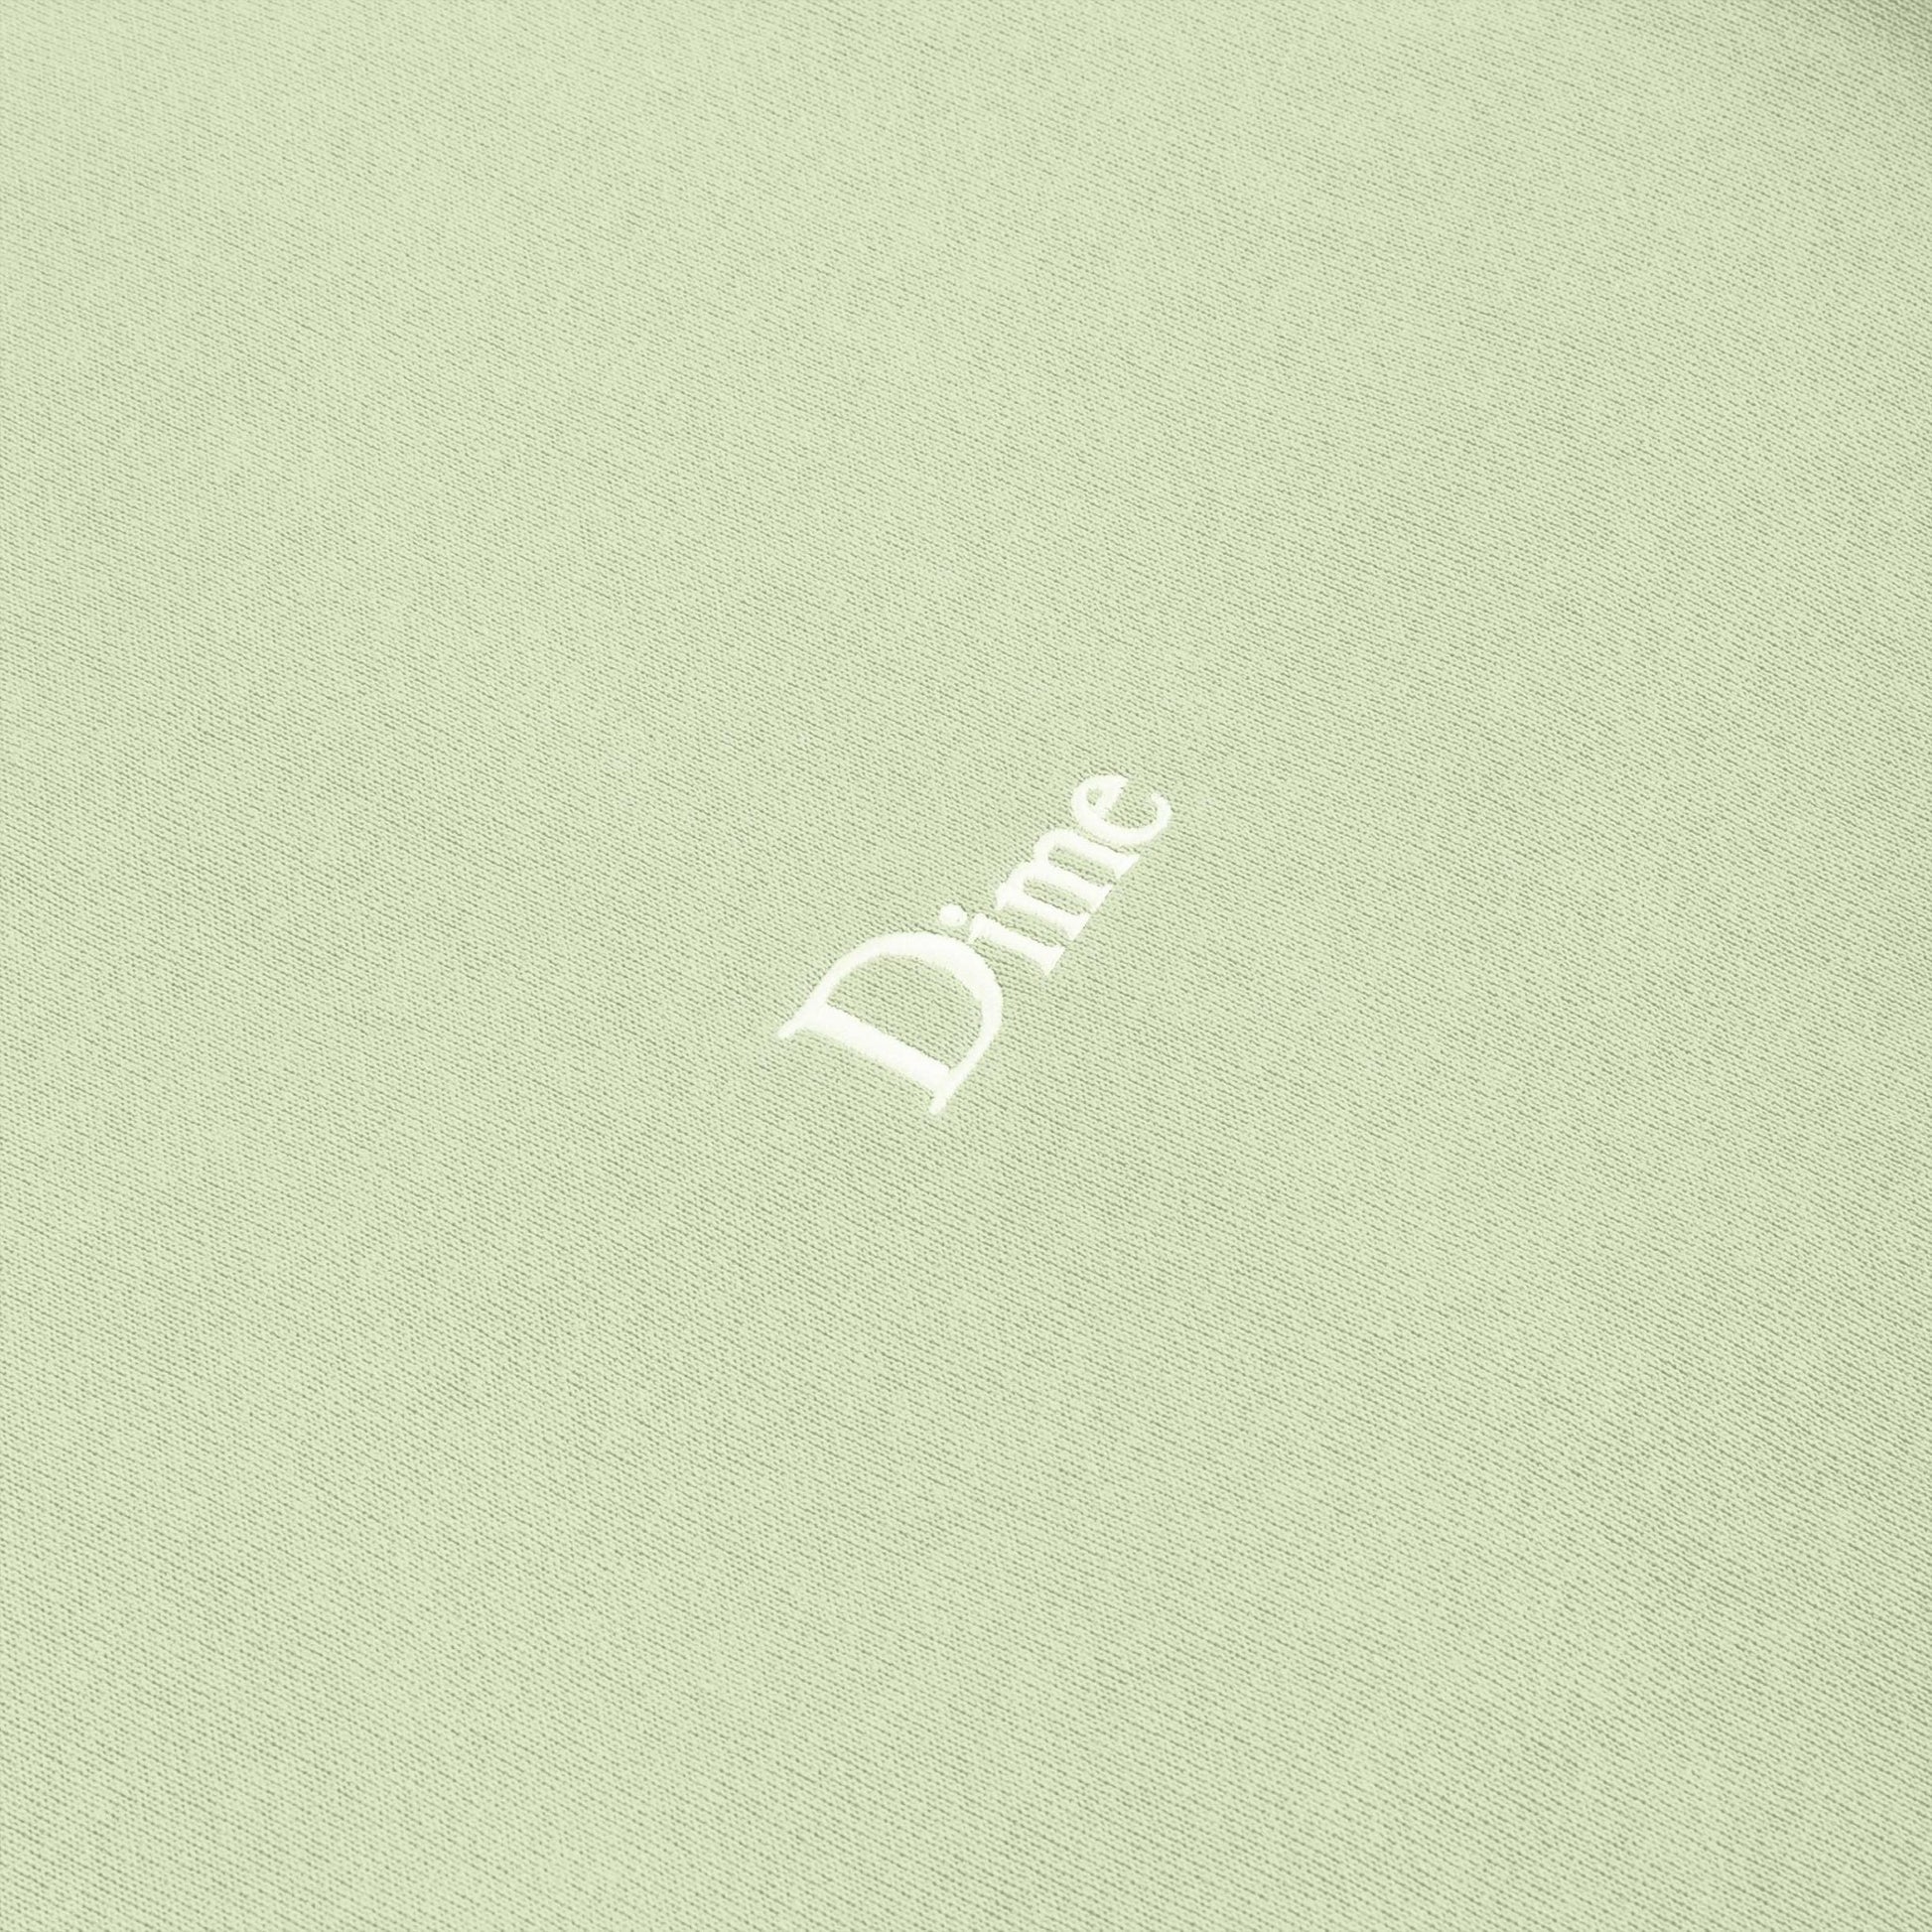 Dime Classic Small Logo T-shirt, light mint - Tiki Room Skateboards - 3